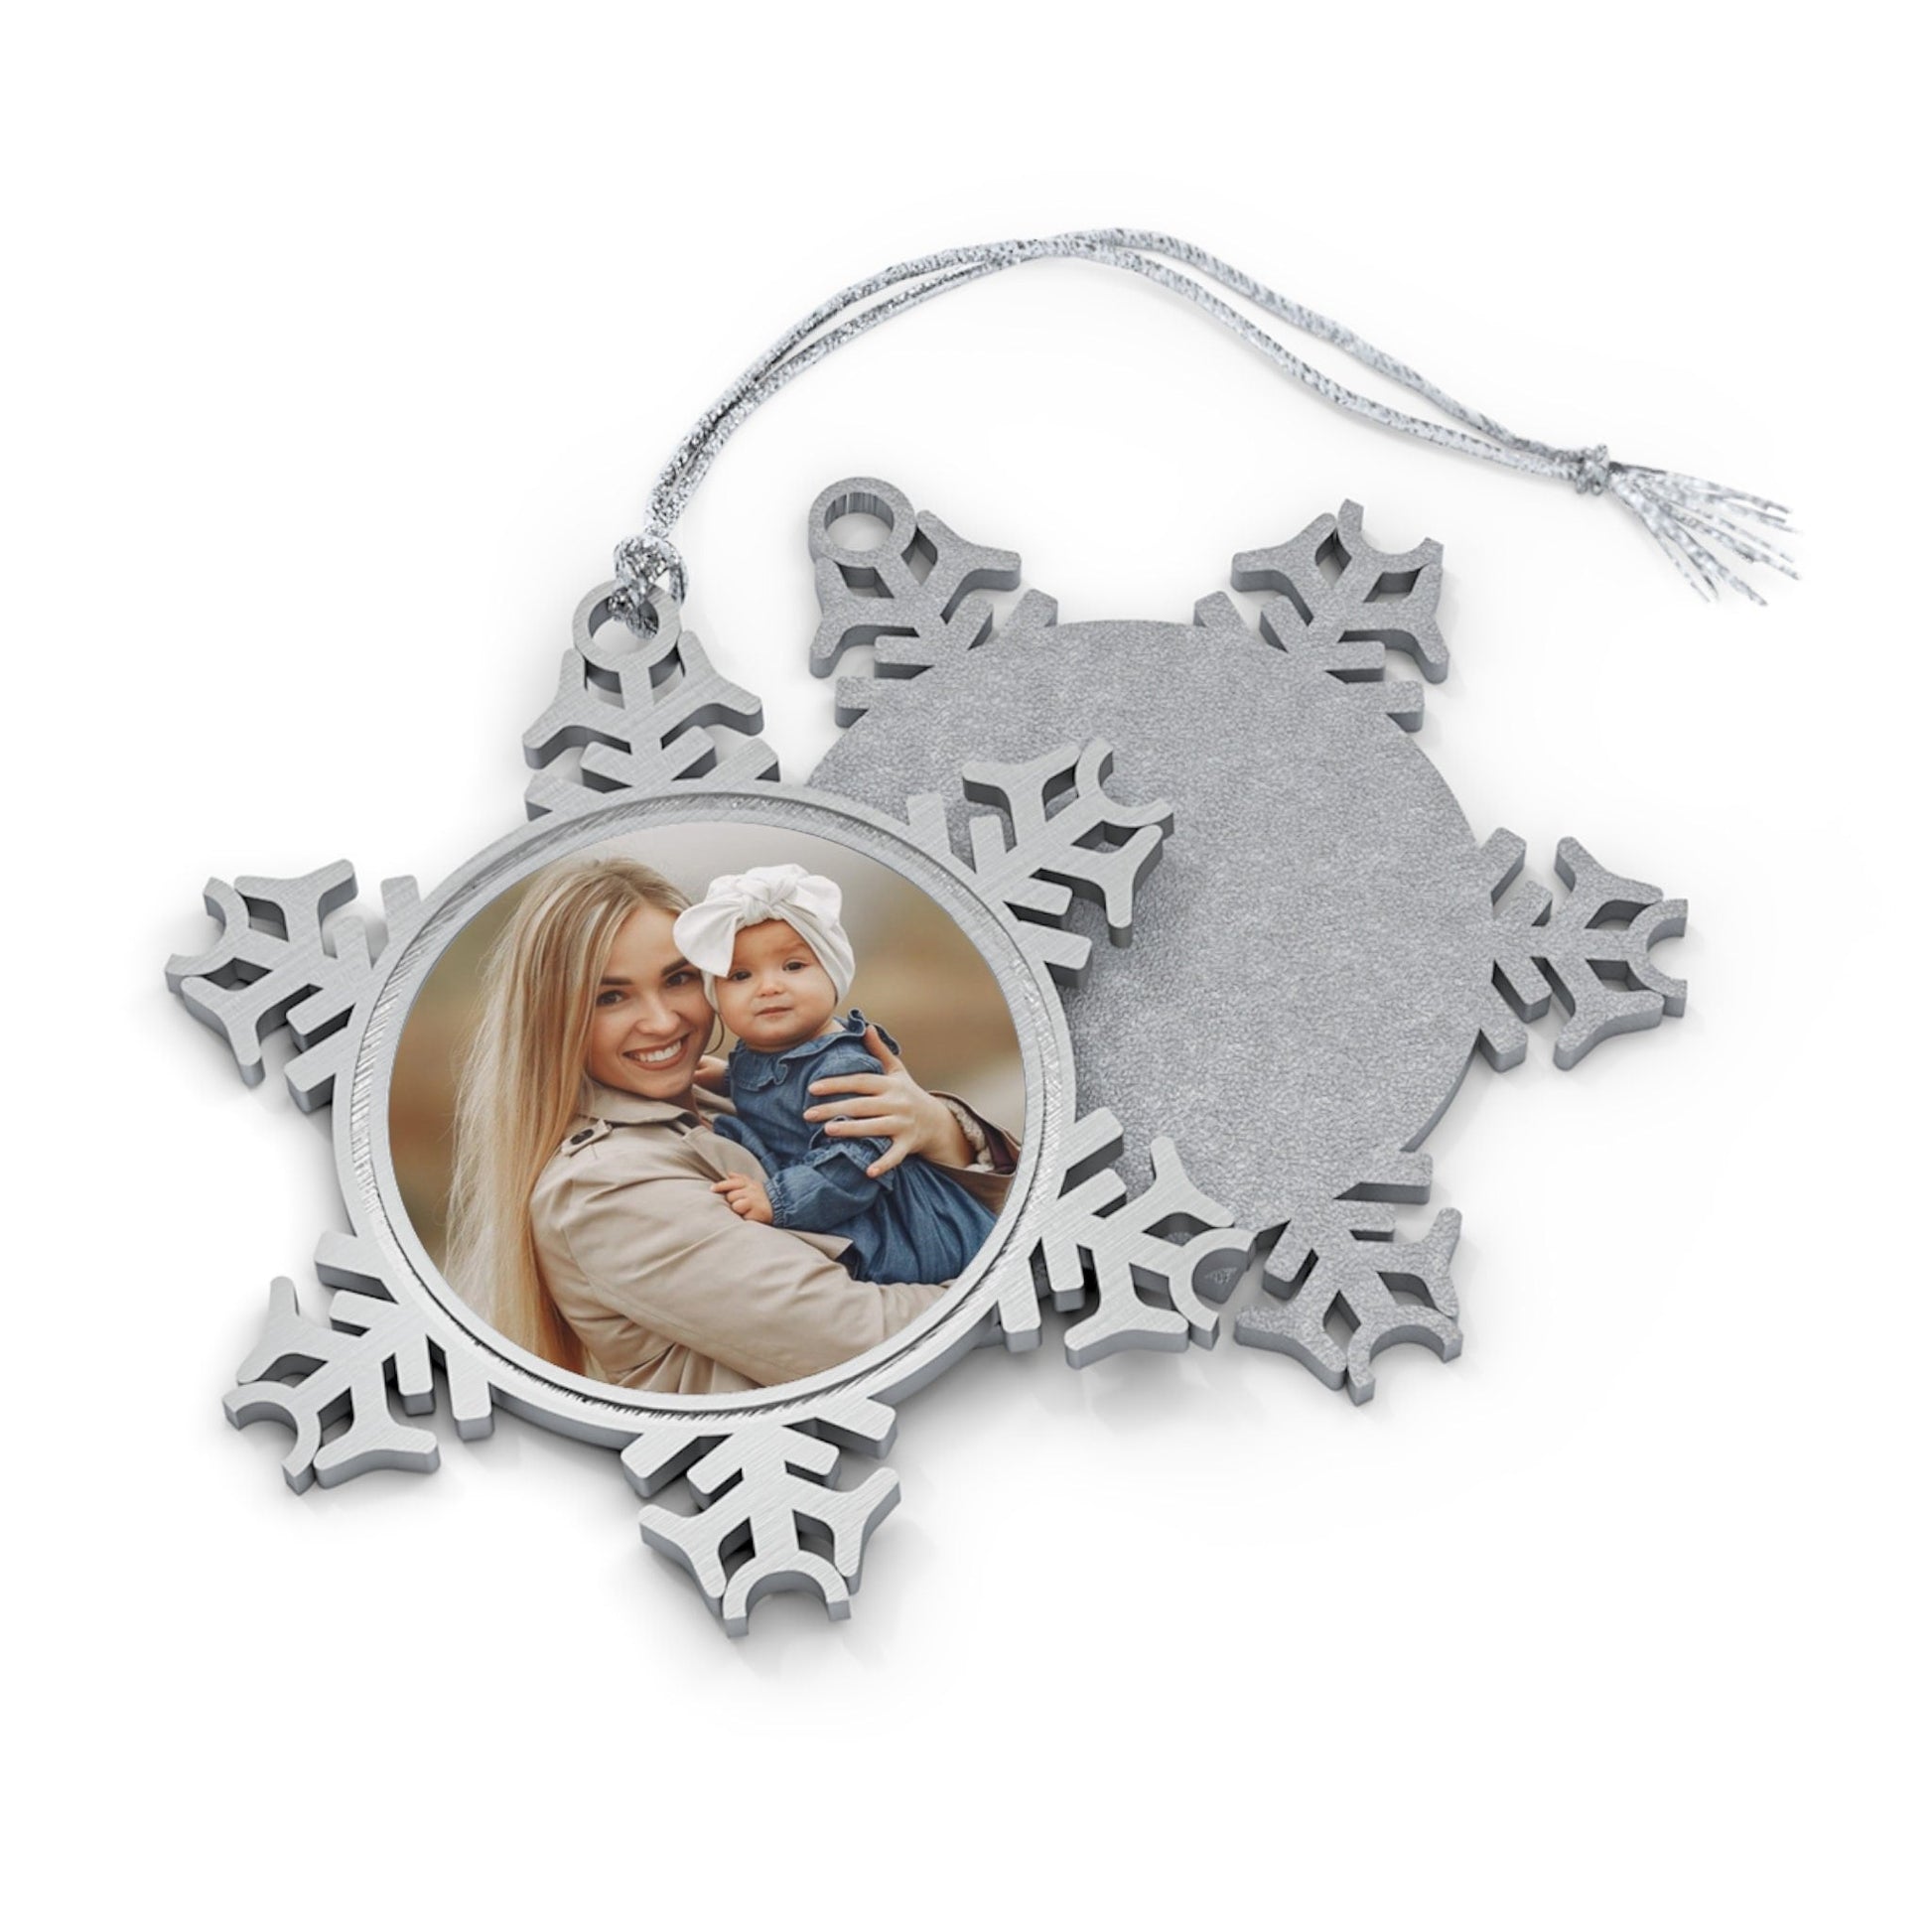 Custom image Snowflake Christmas Keepsake Ornament photo ornaments